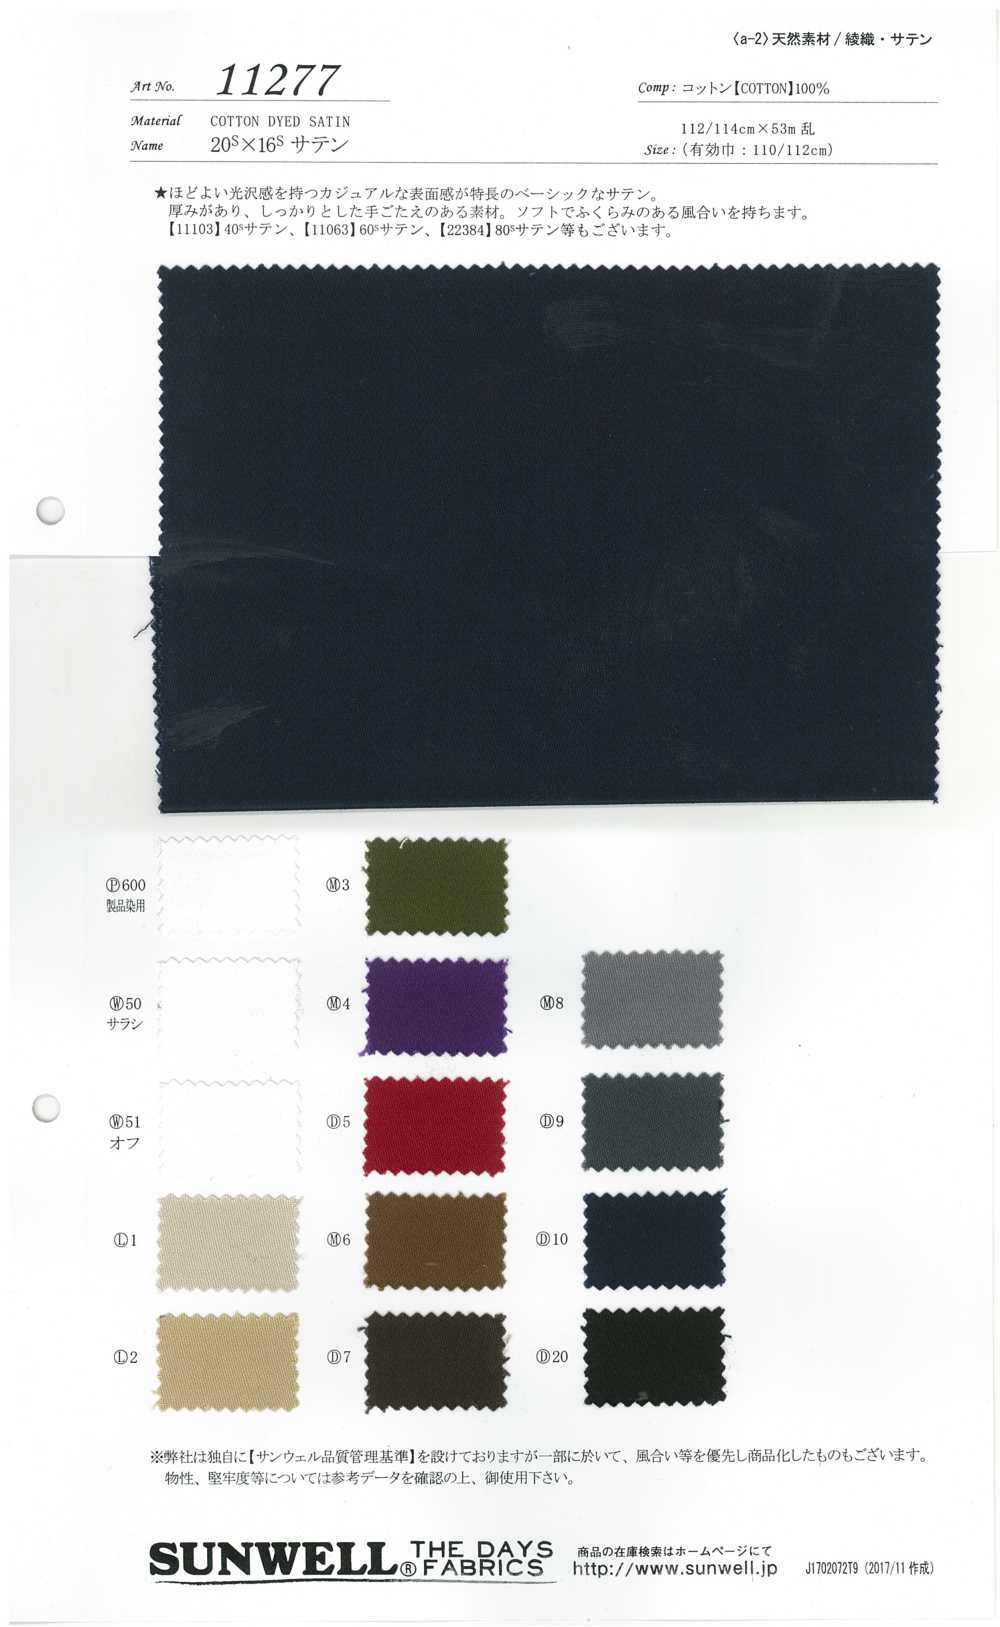 11277 20 Single Thread X 16 Thread Satin[Textile / Fabric] SUNWELL